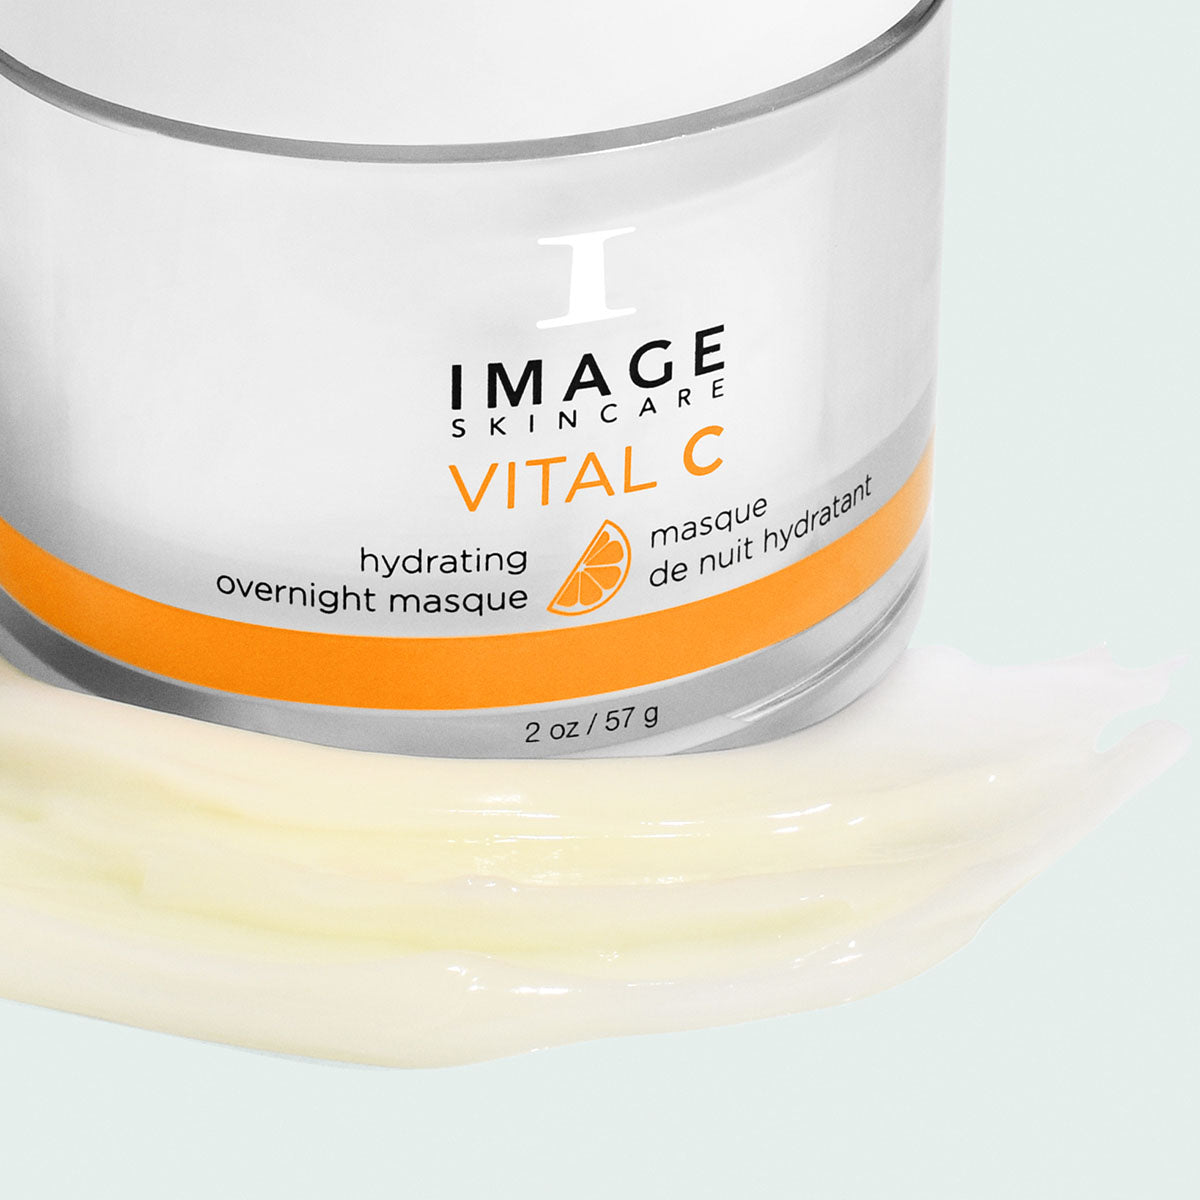 Imagskincare VITAL C Hydrating Overnight Masque - 57g